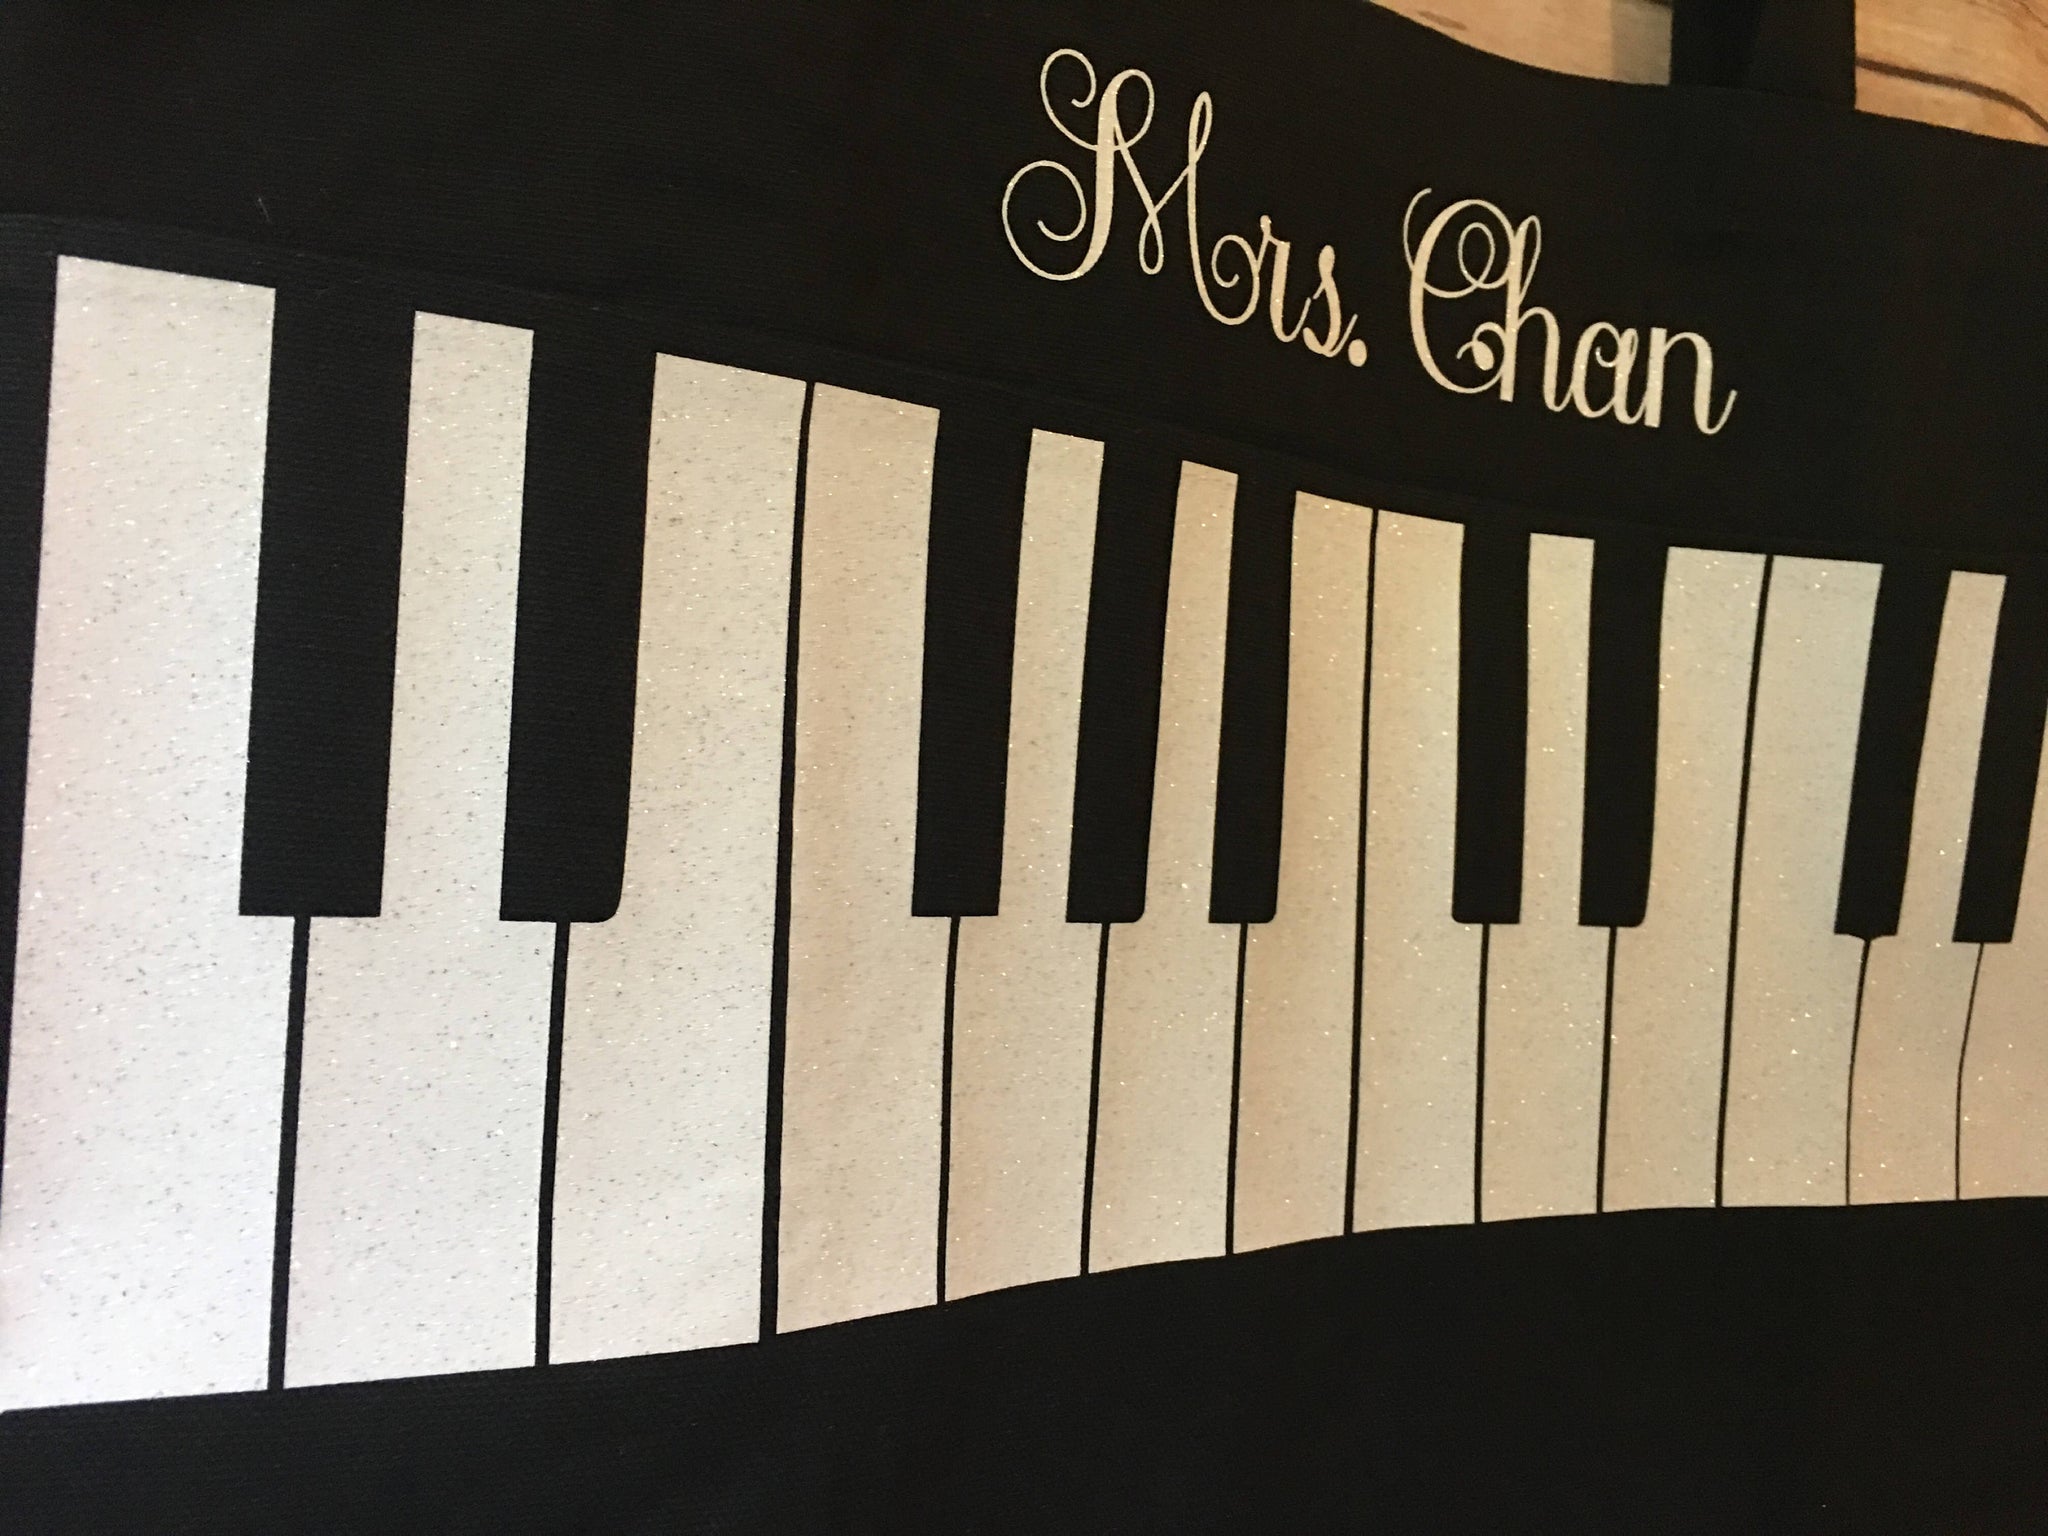 Personalized Piano Tote Bag 